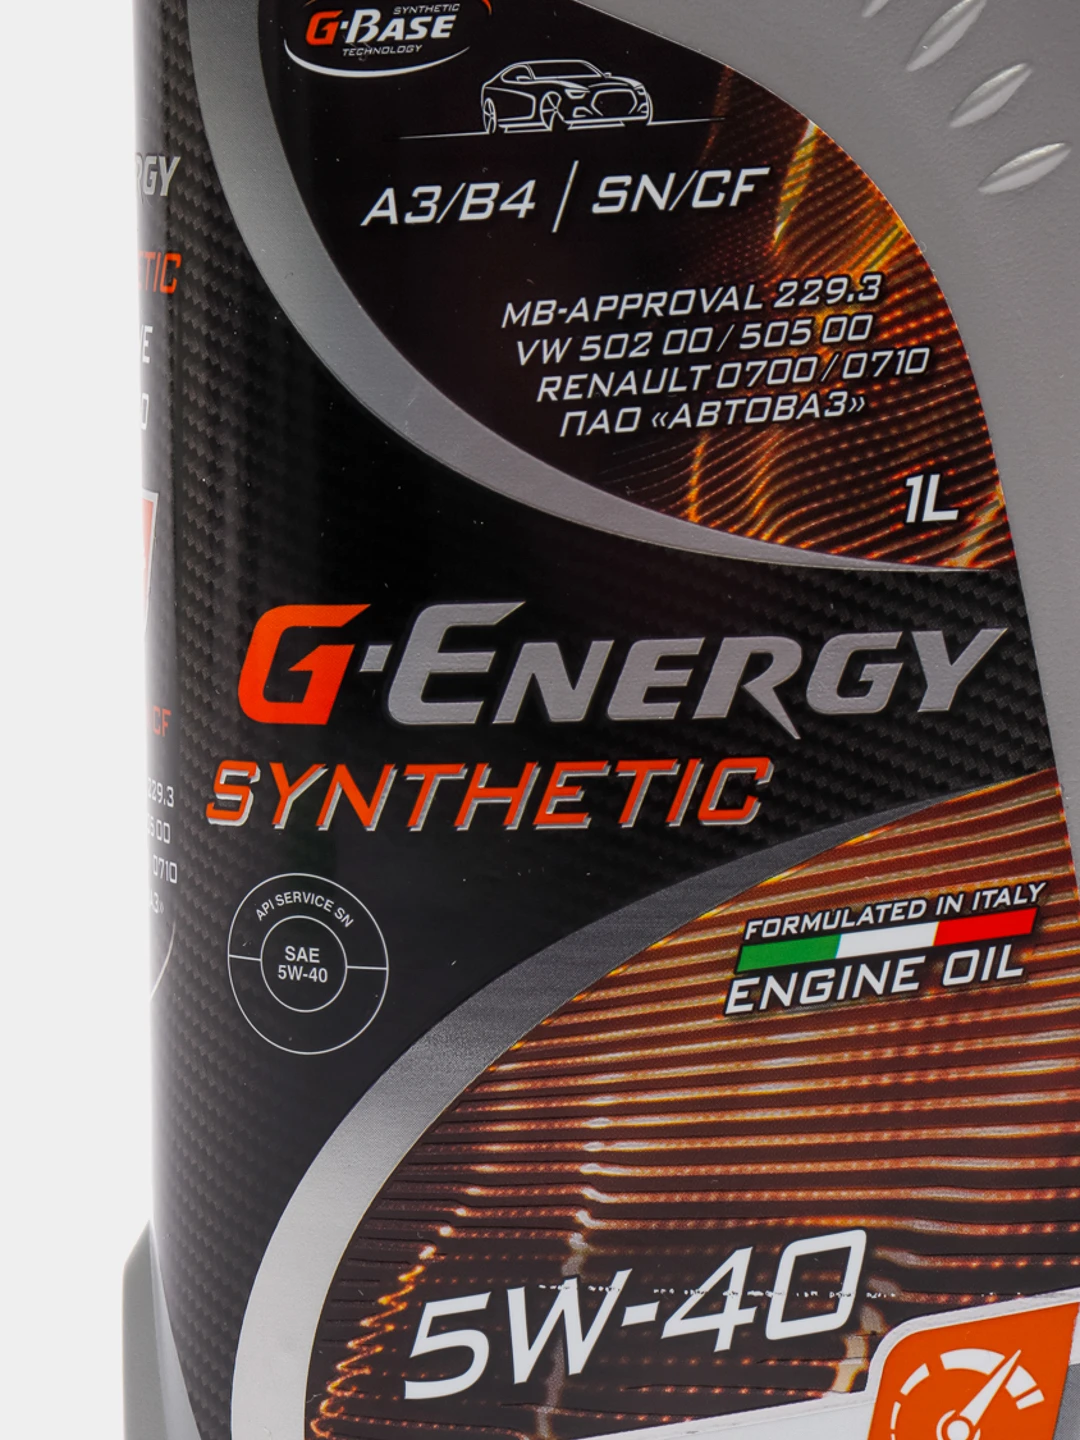 Energy synthetic active 5w40